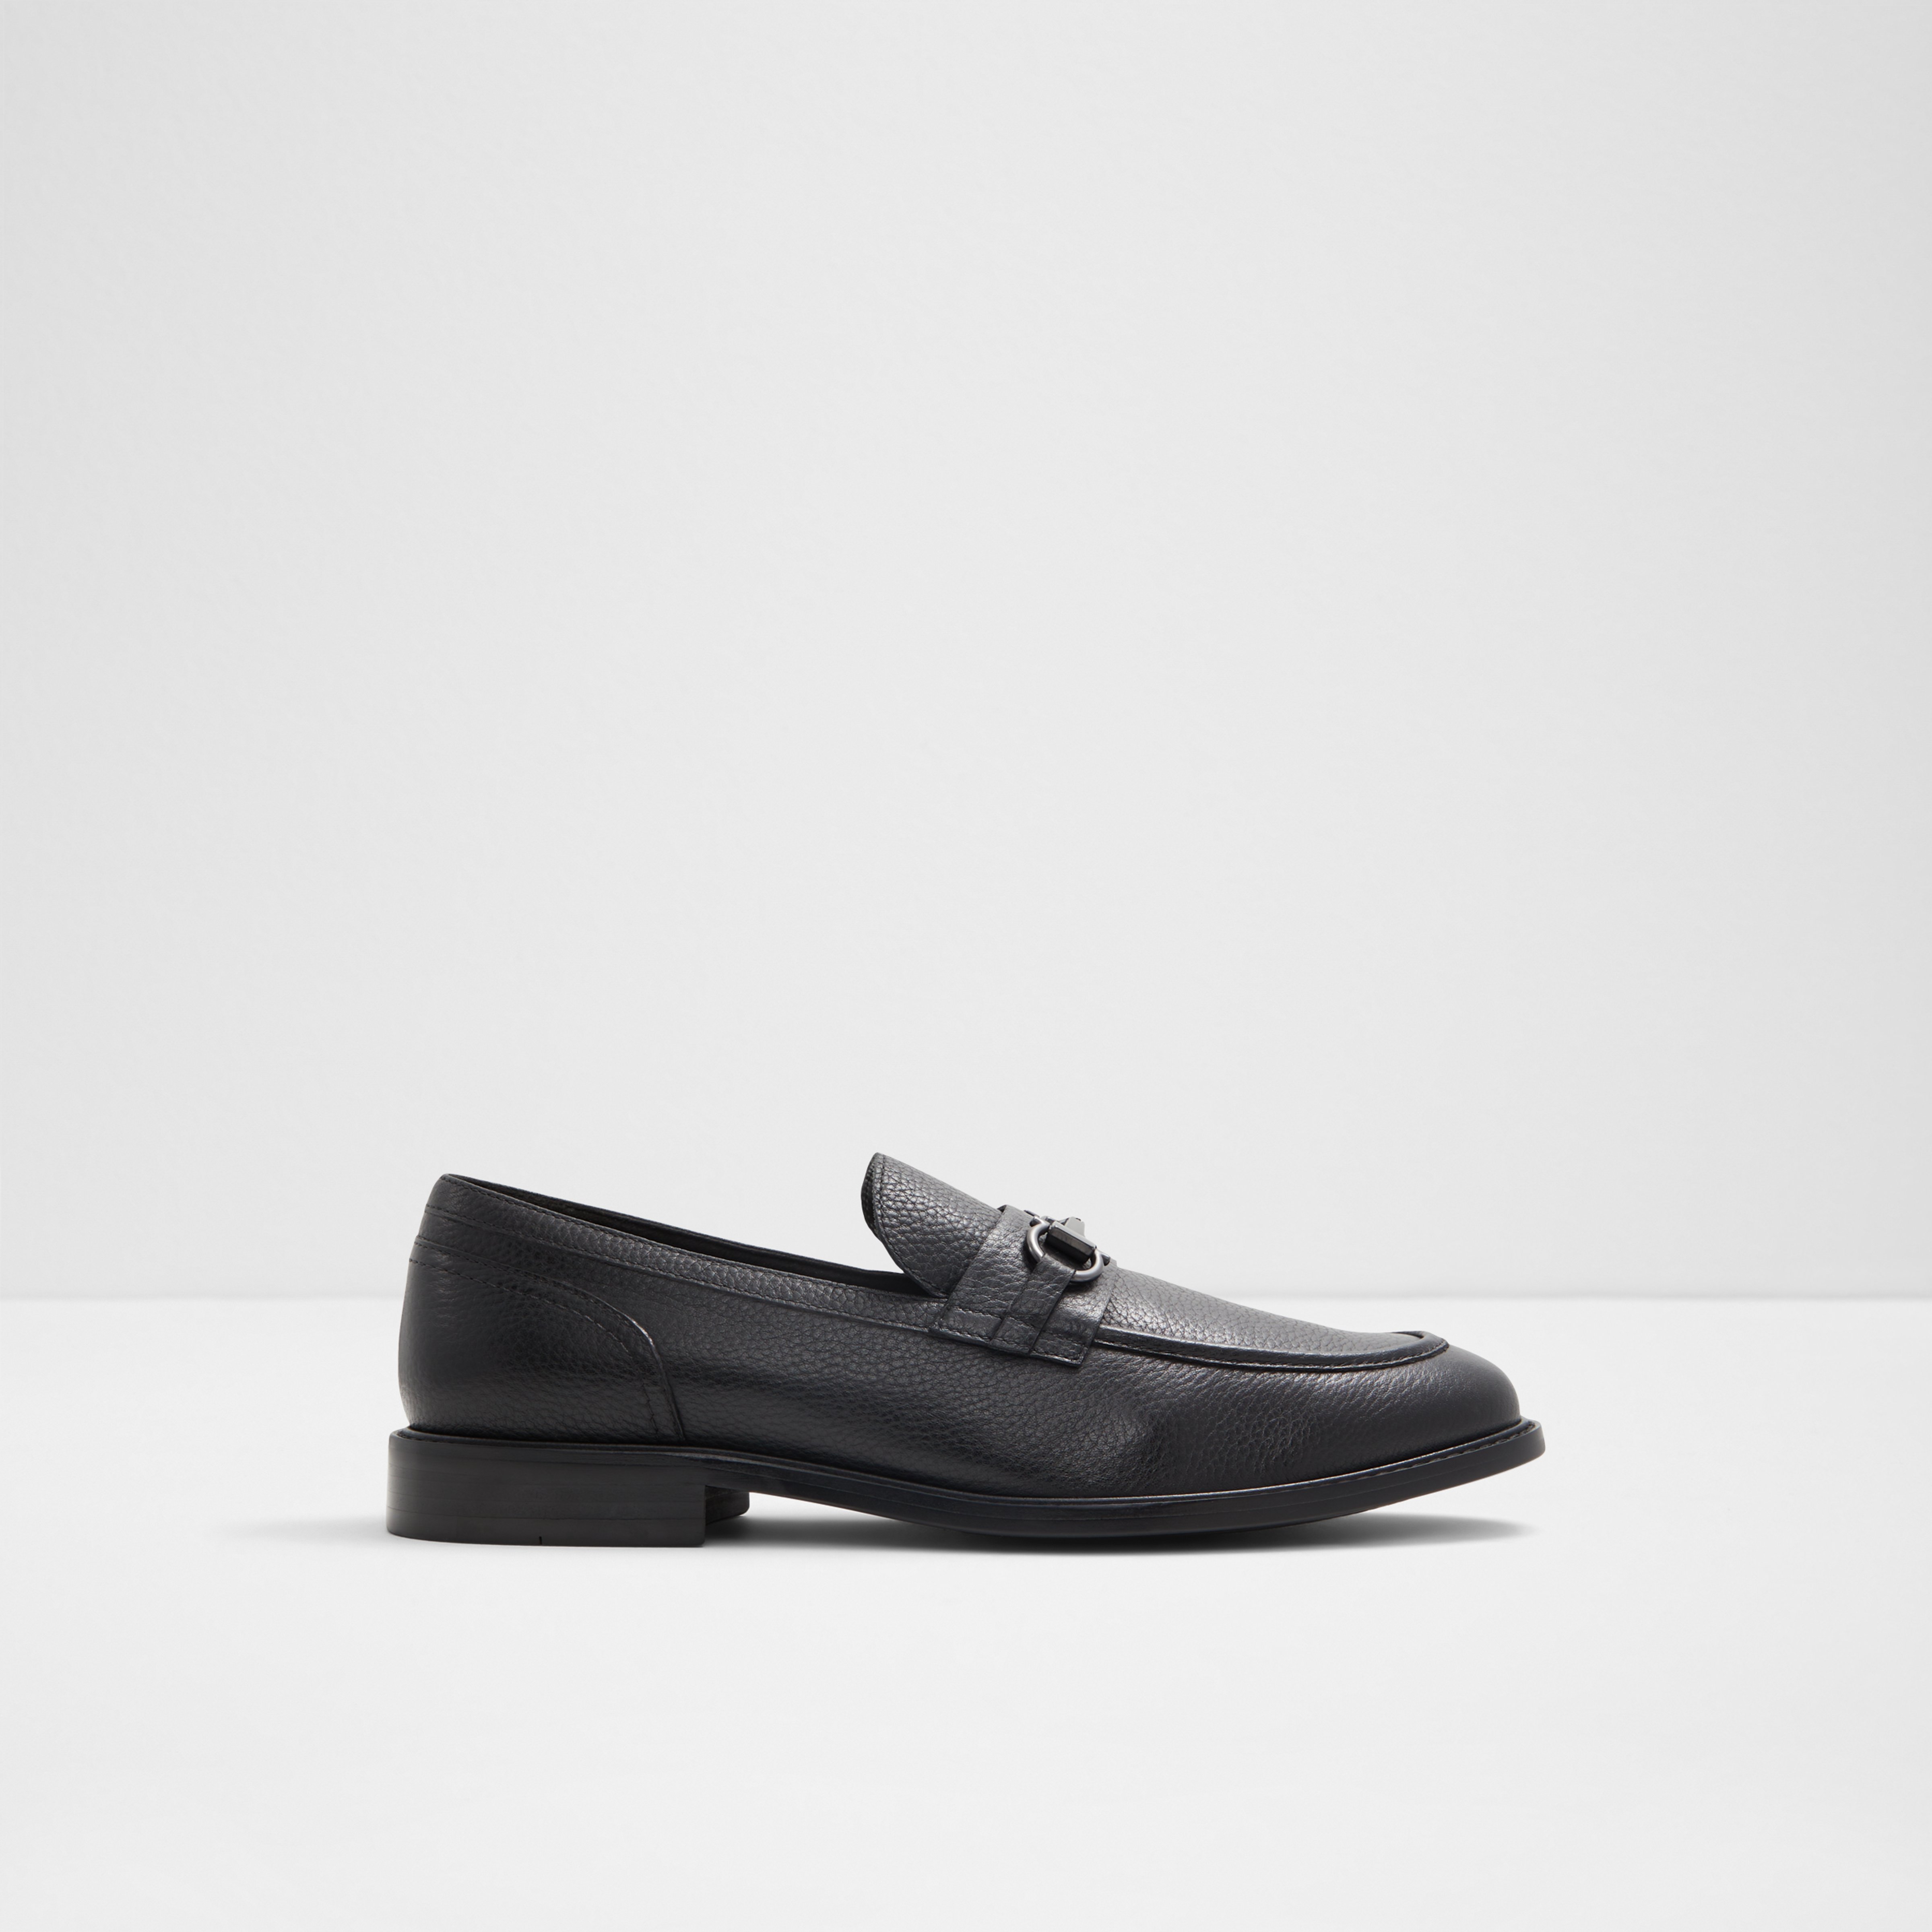 Aldo Schergerflex Shoes - Mens